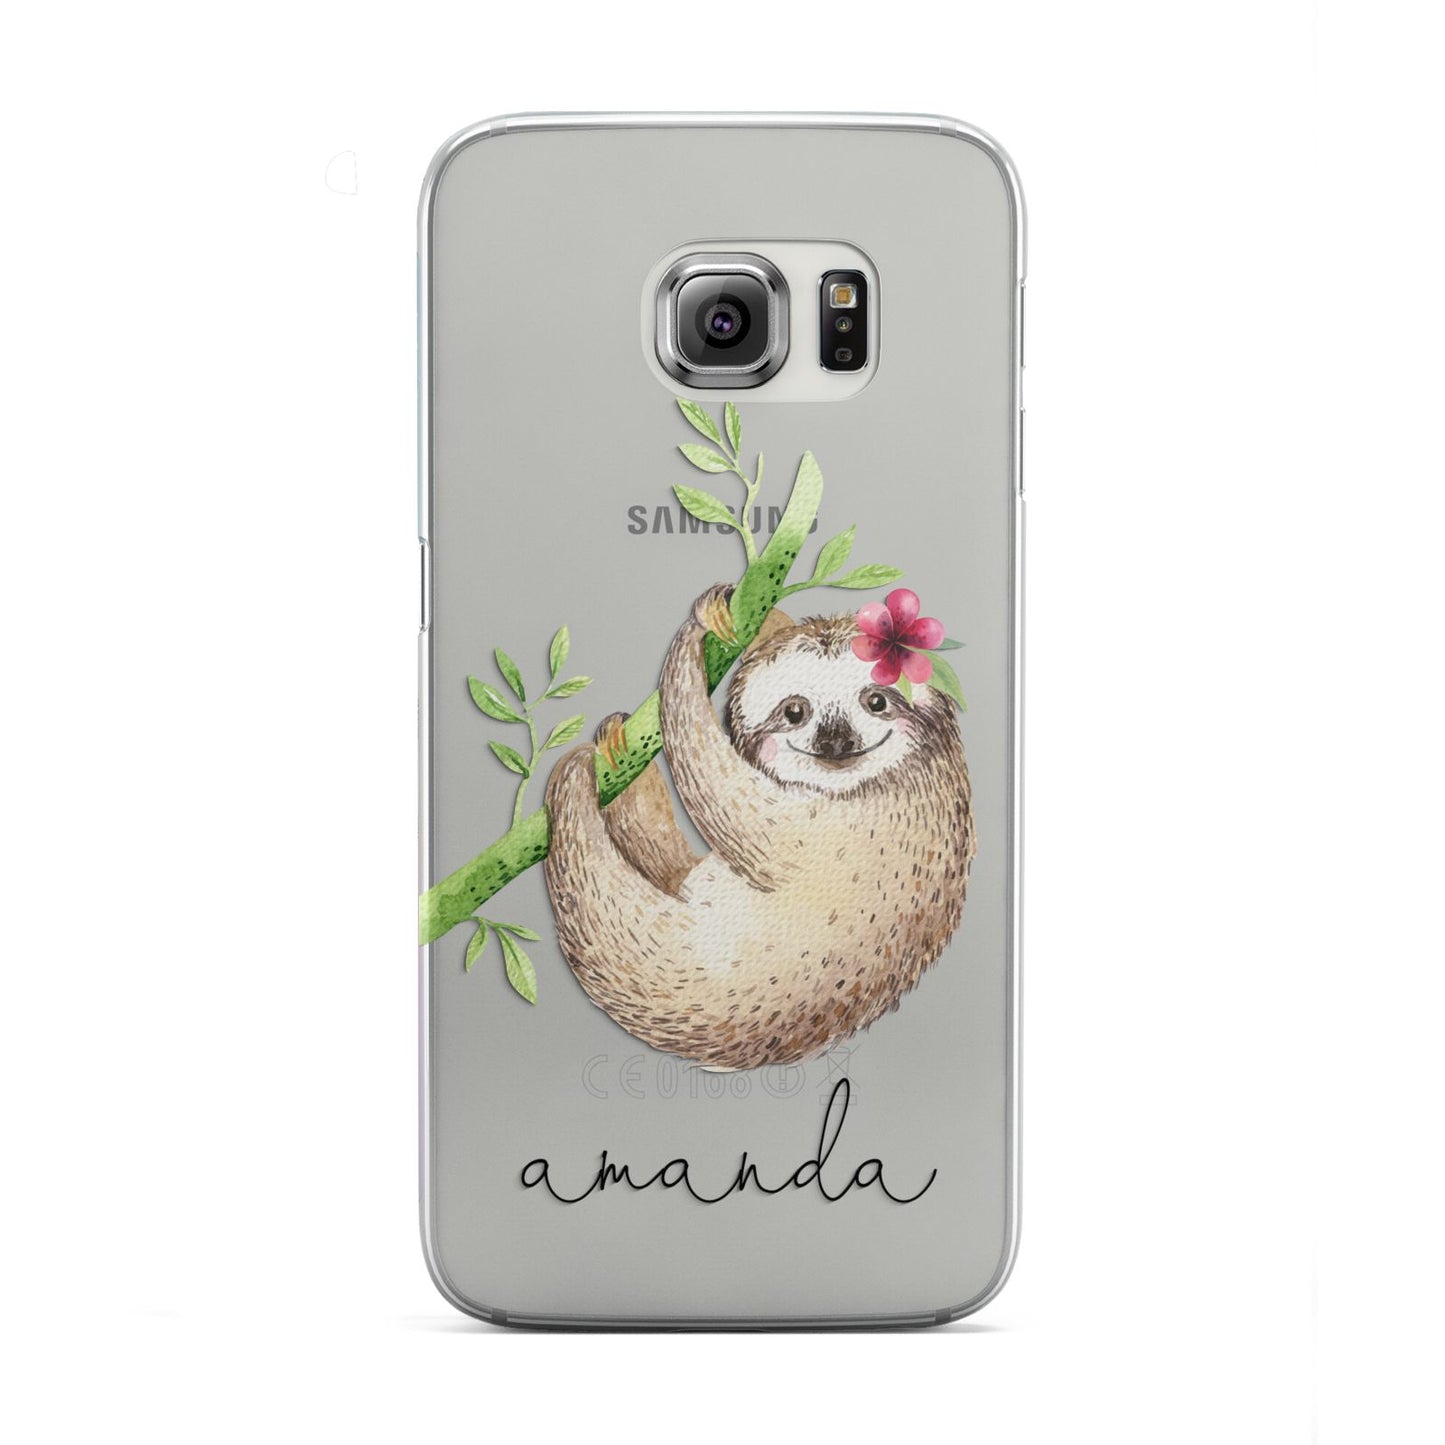 Personalised Sloth Samsung Galaxy S6 Edge Case